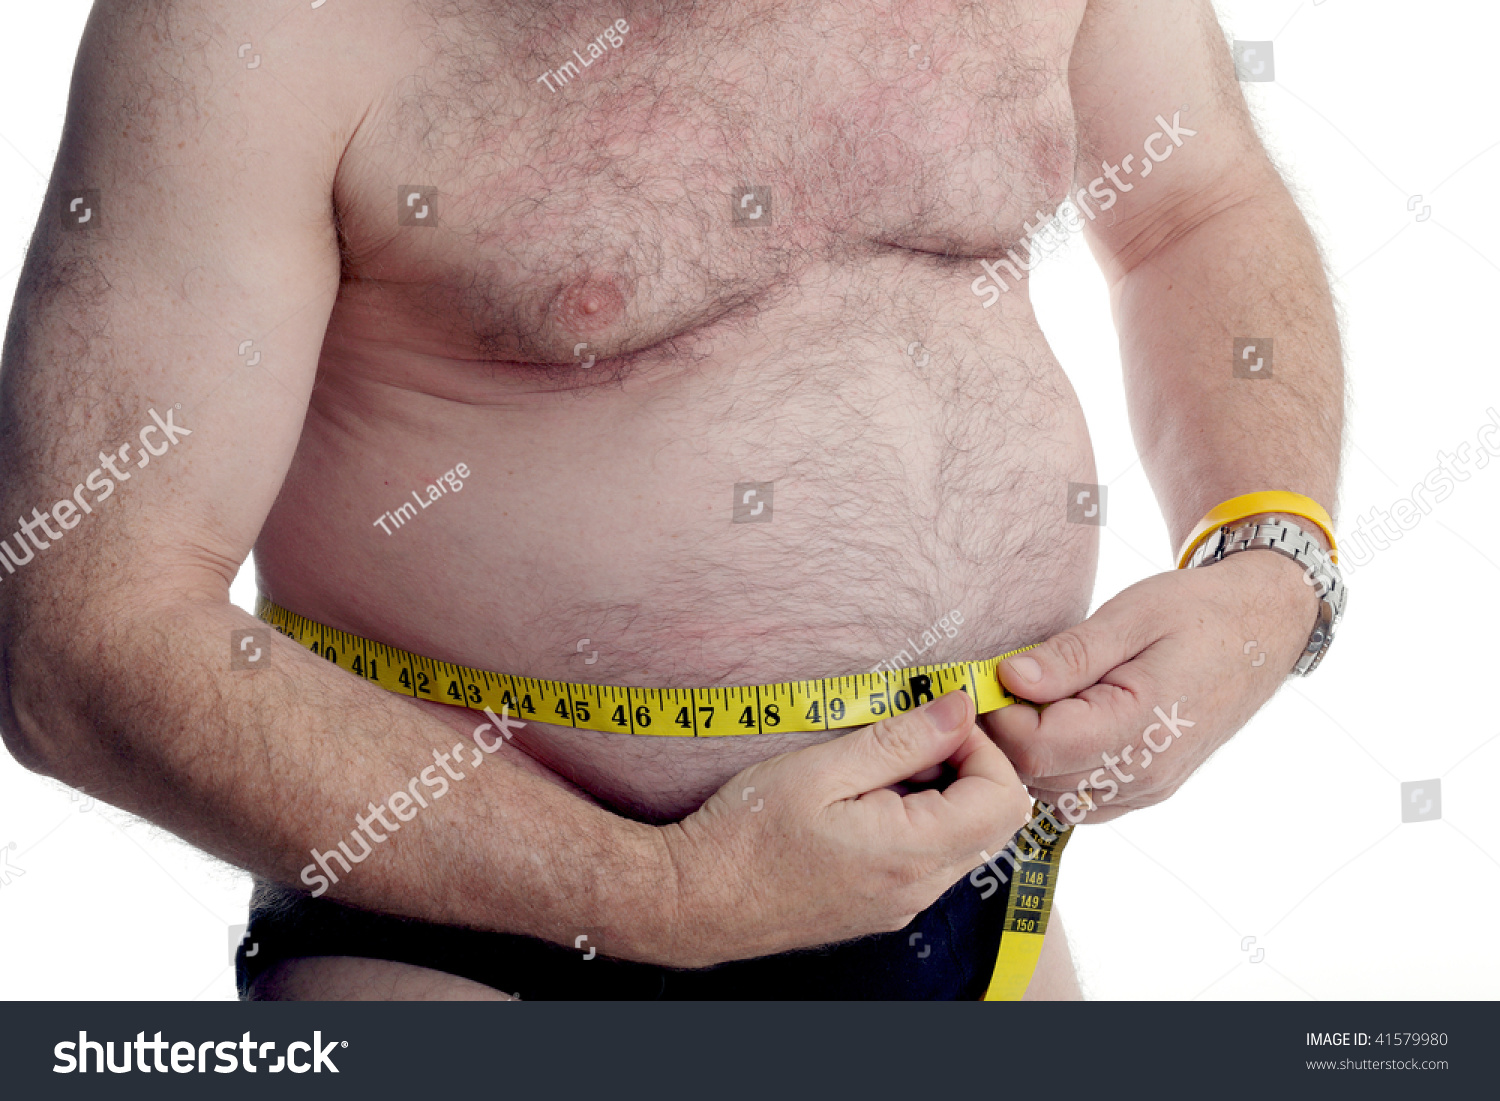 Fat Man Big Belly Stock Photo 276529994 - Shutterstock